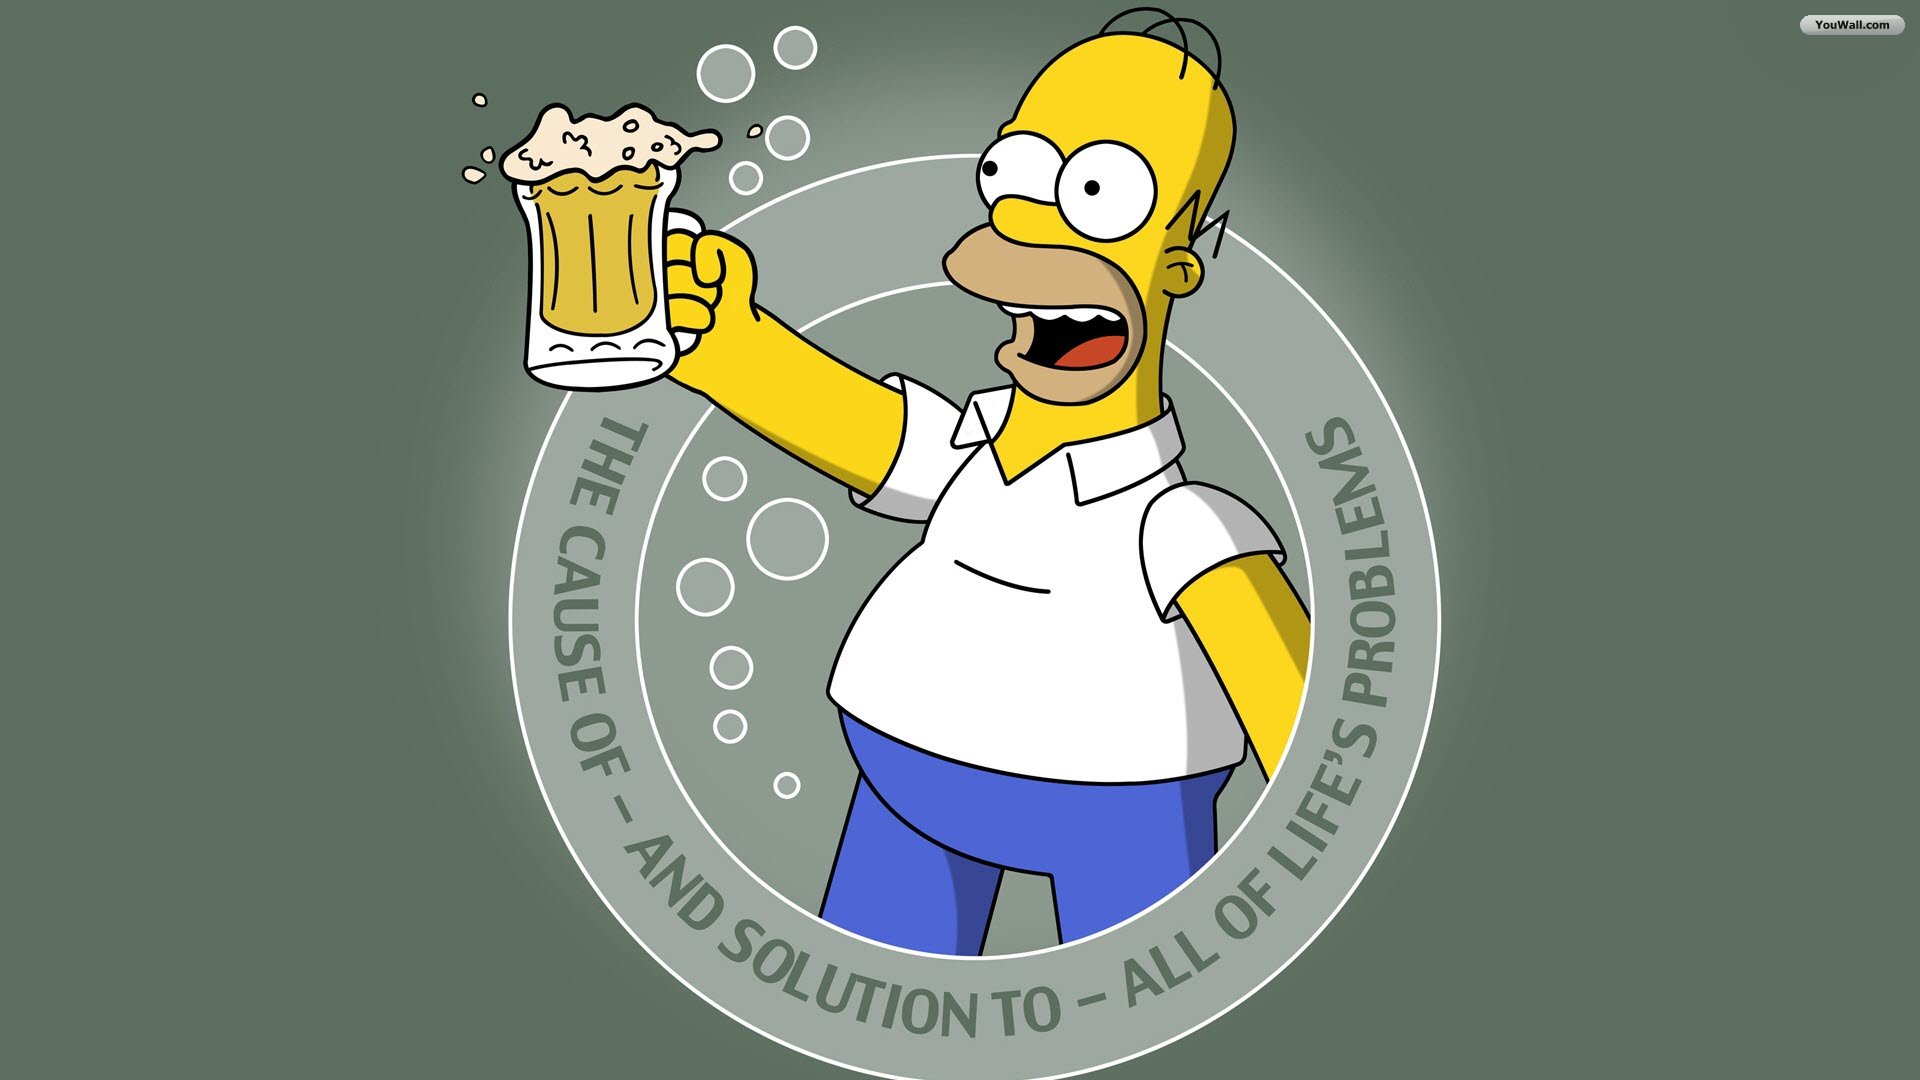 Homer Simpson Wallpaper